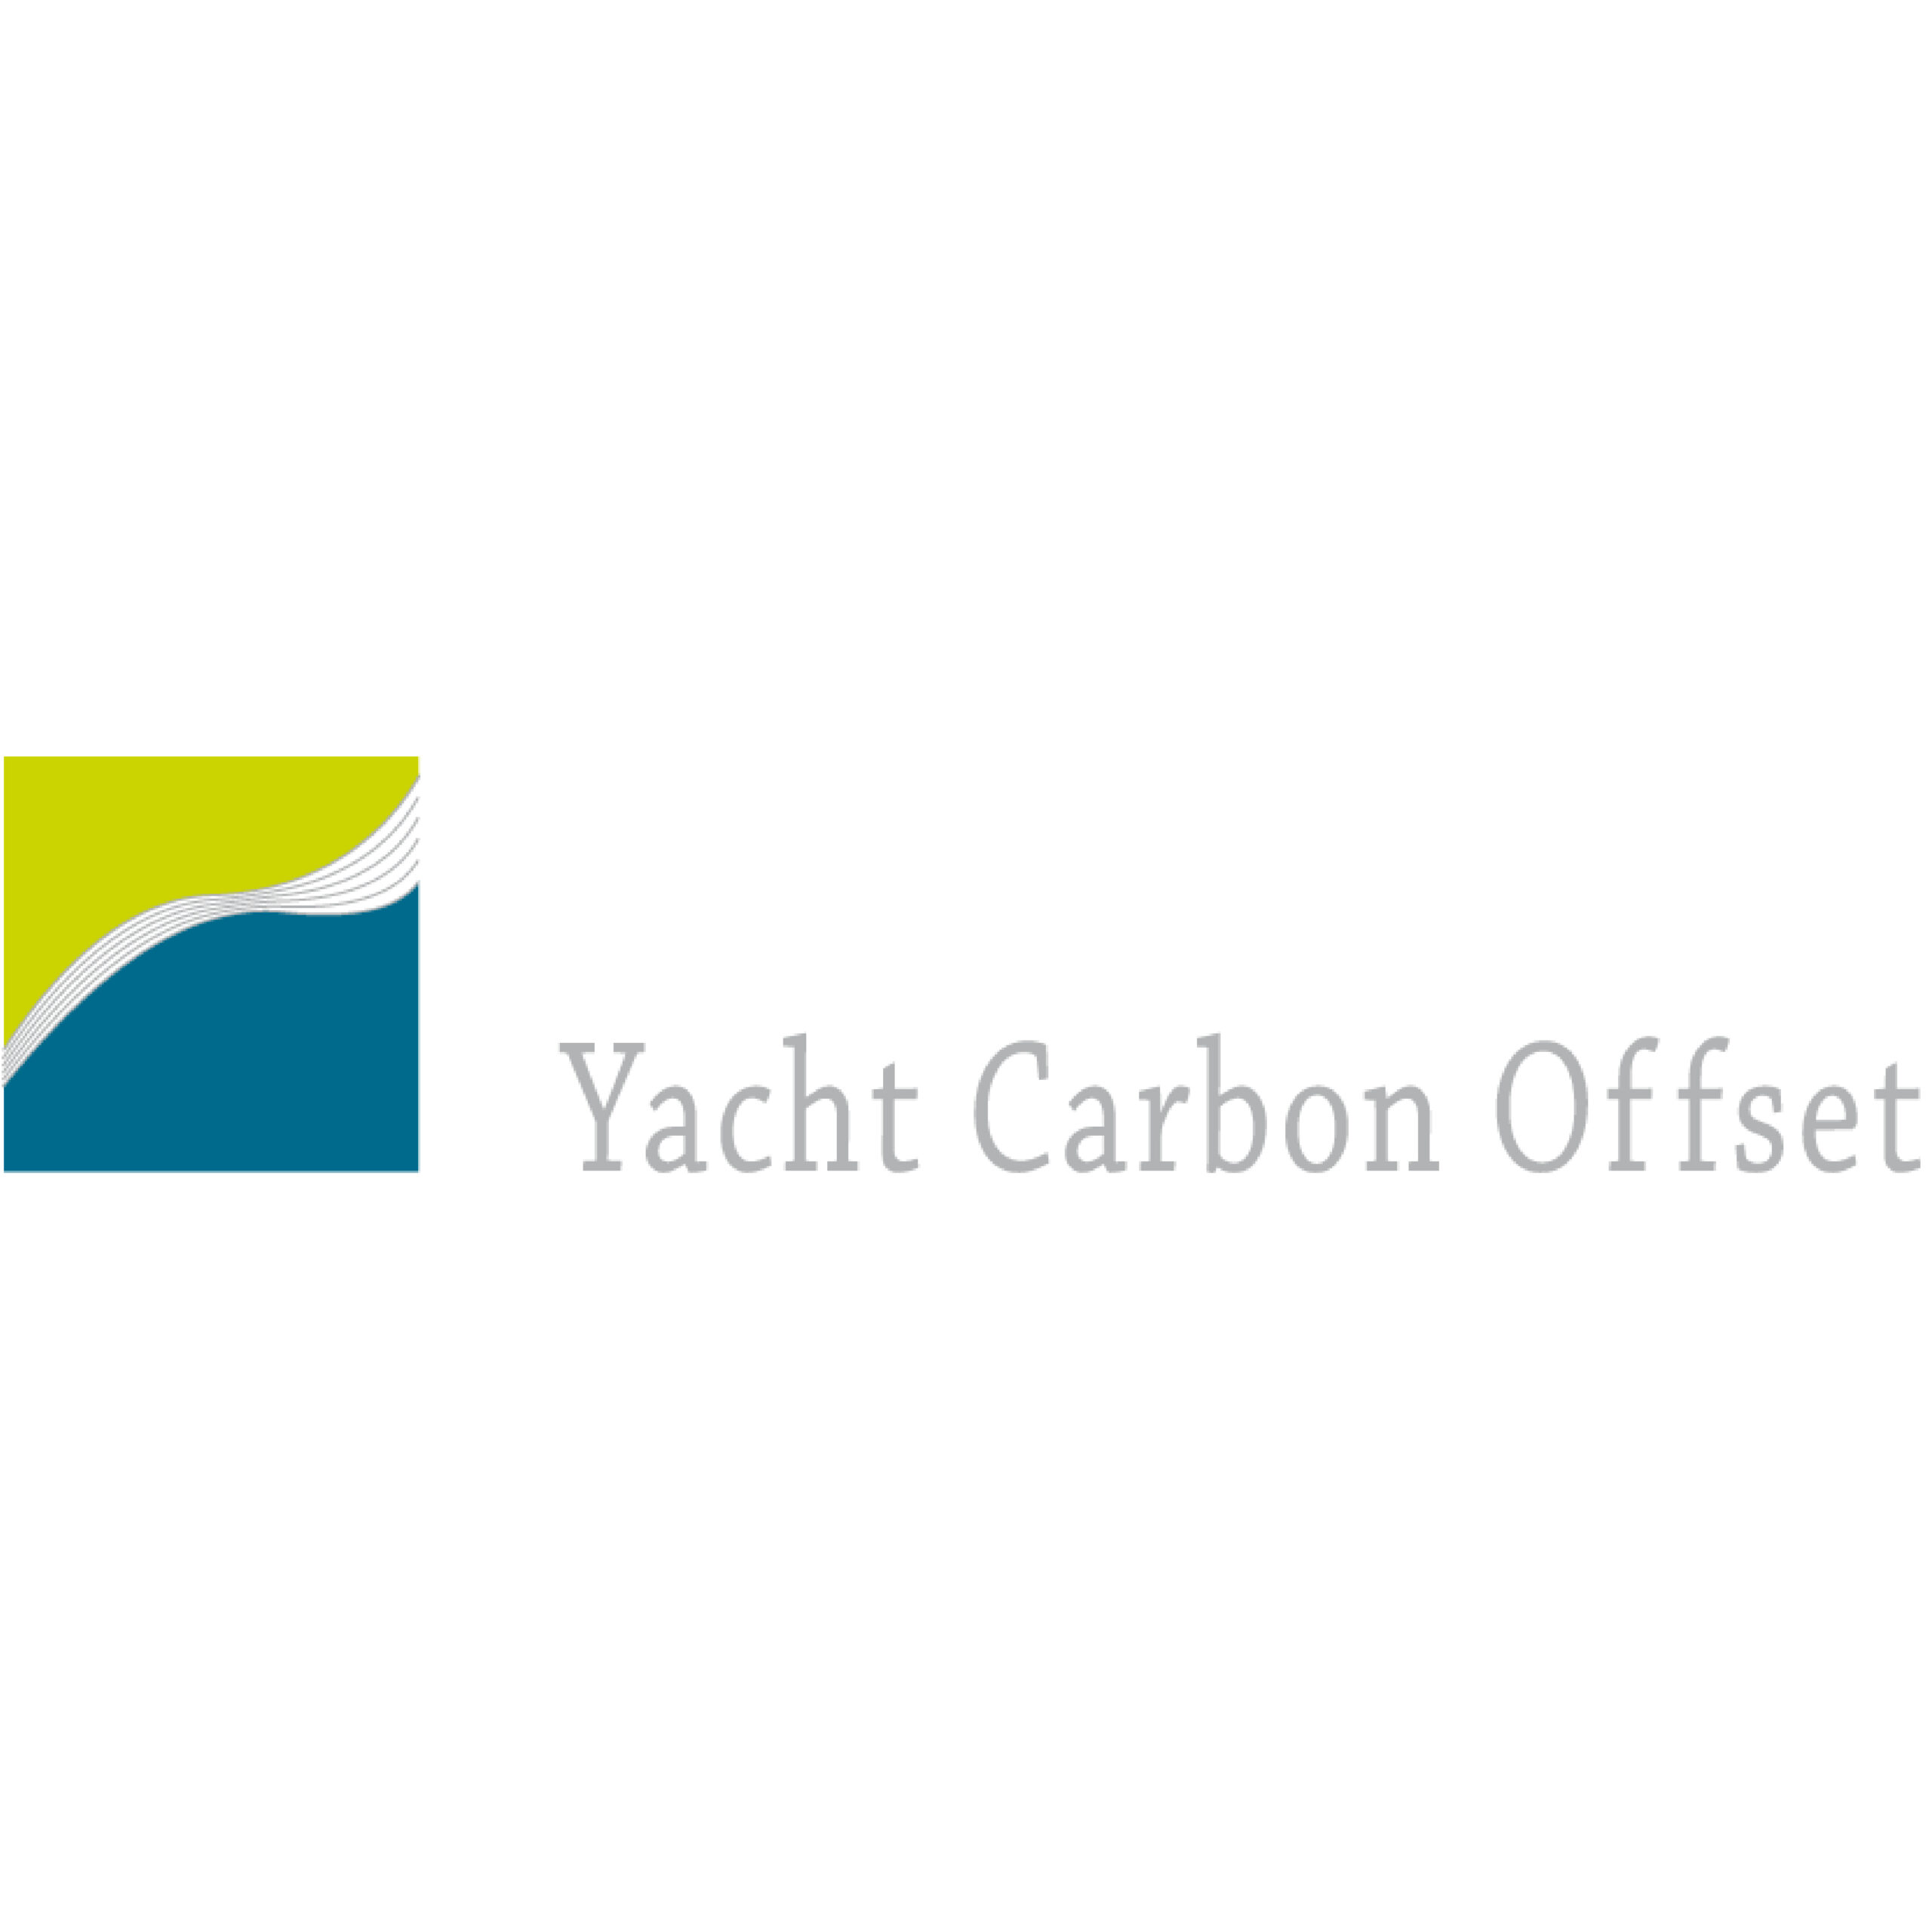 Yacht Carbon Offset